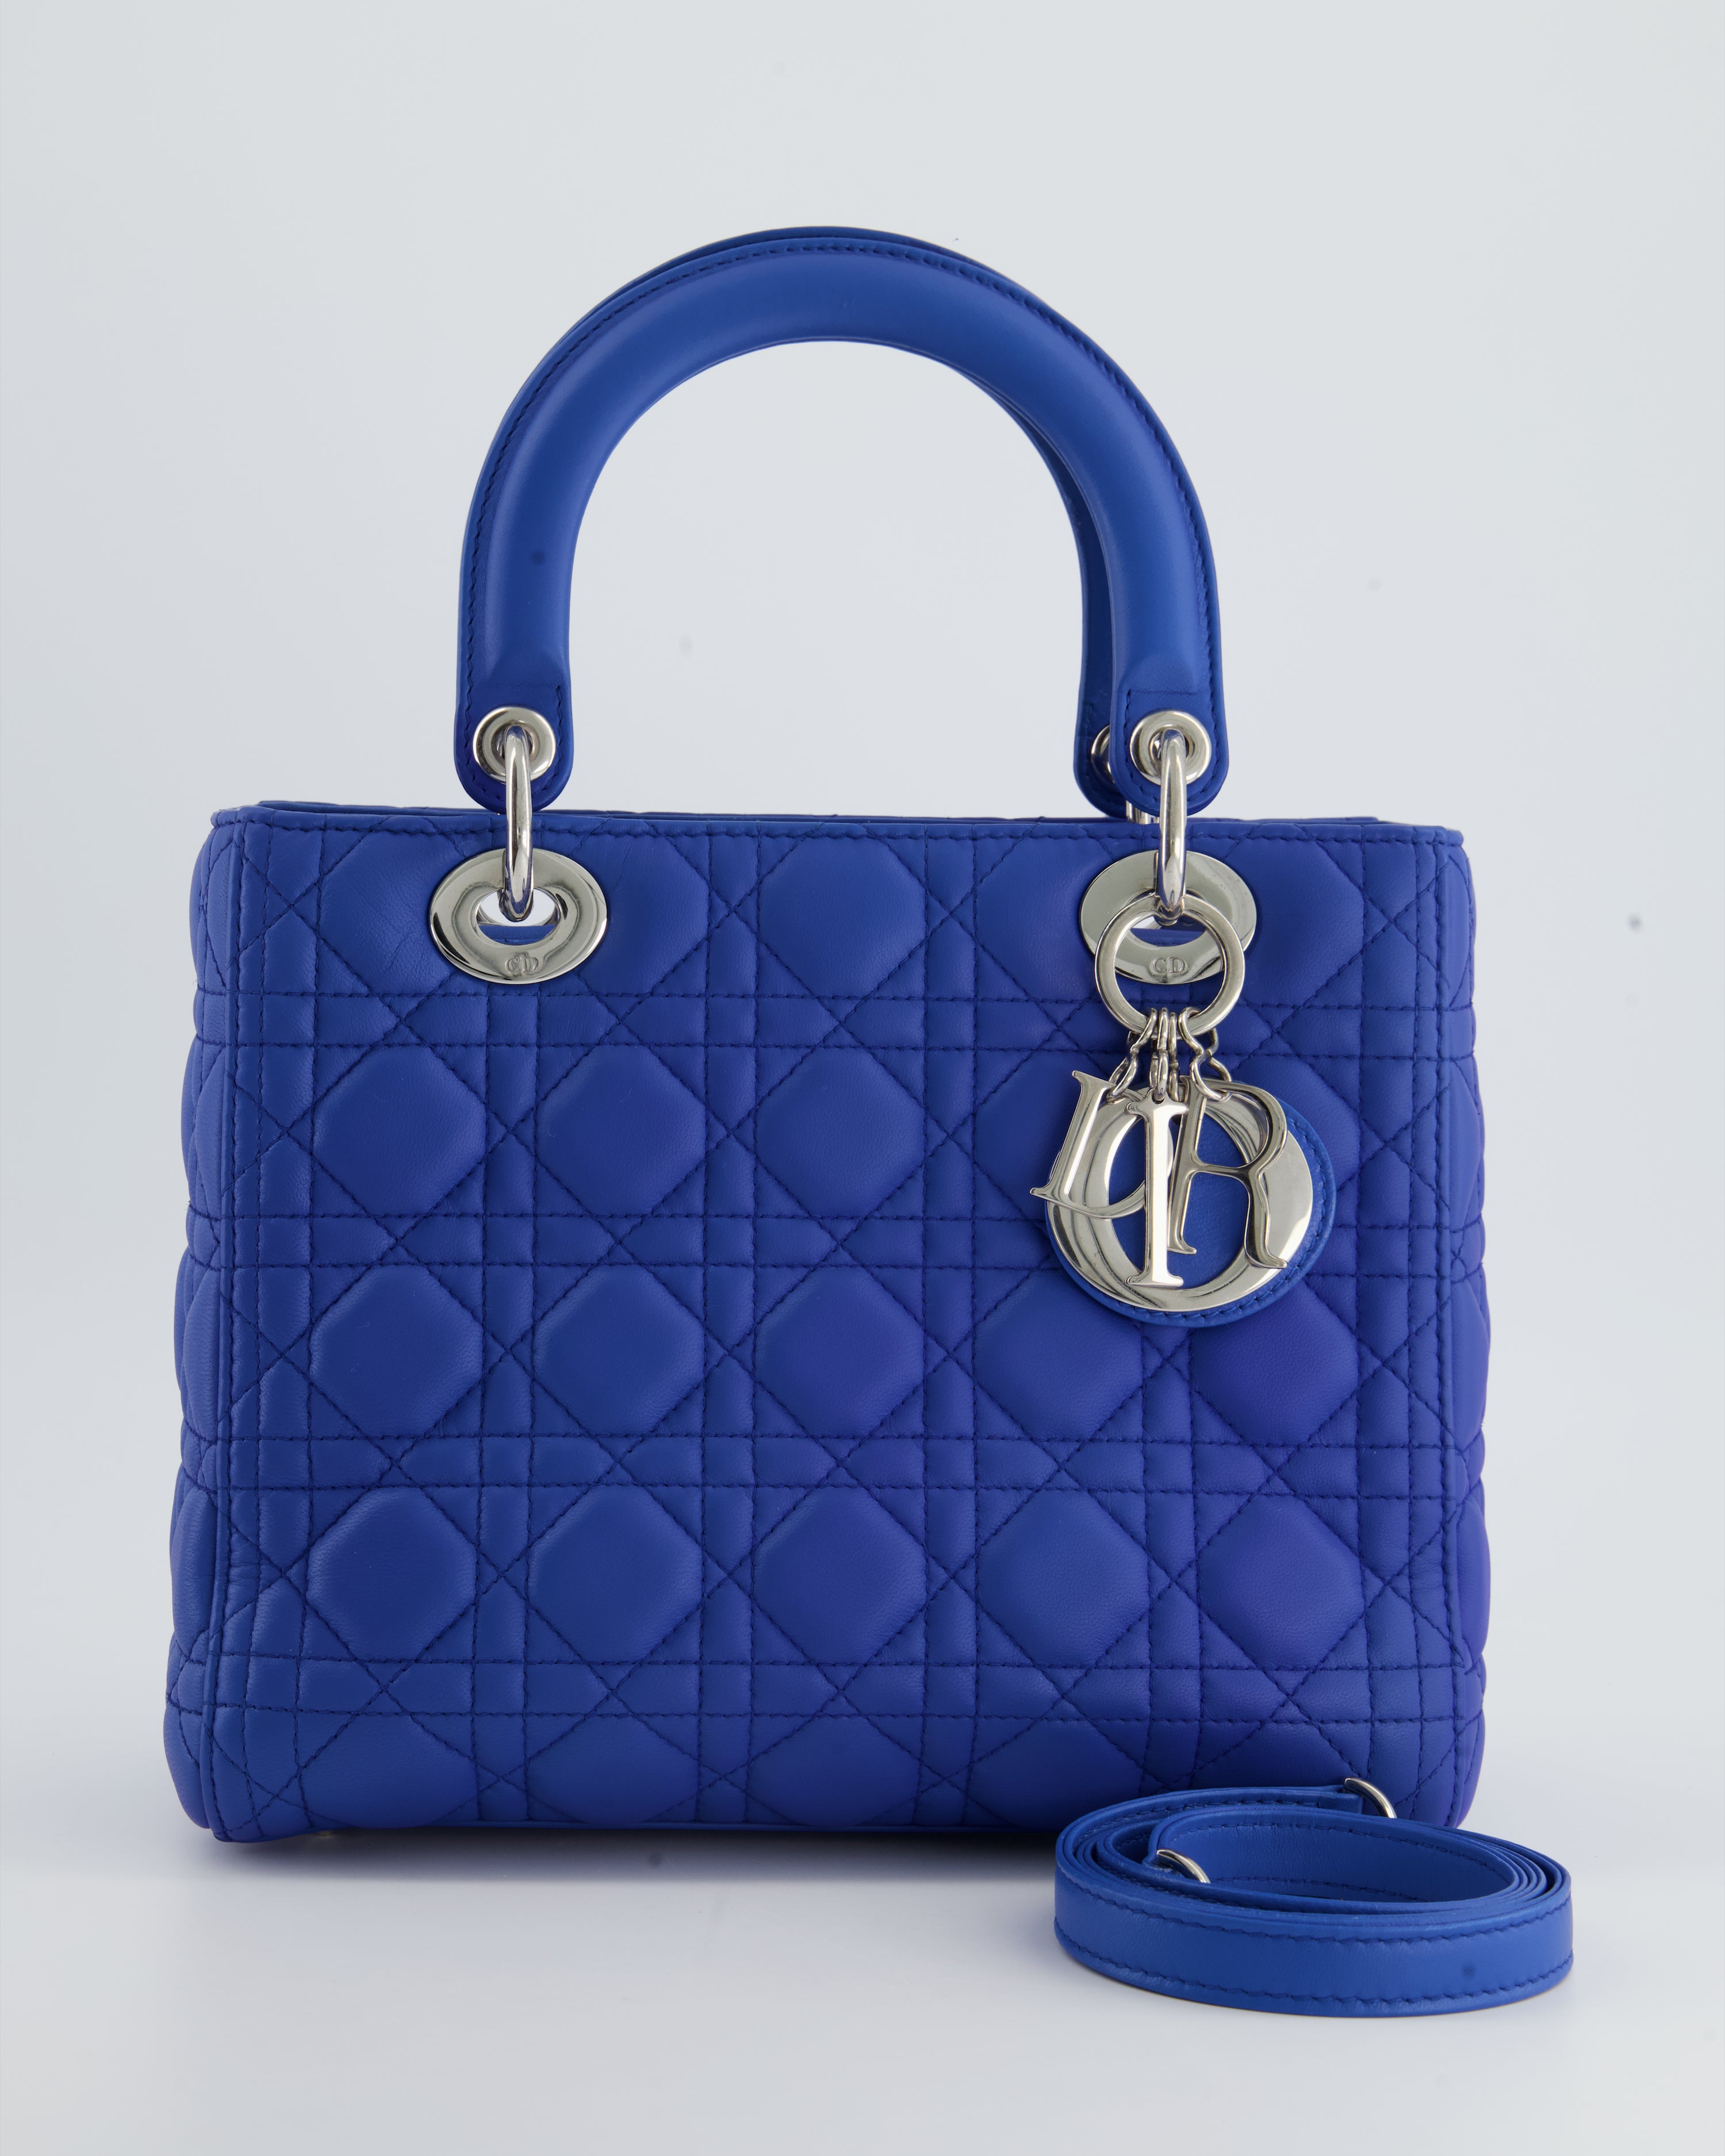 Christian Dior Electric Blue Medium Lady Dior Bag with Silver Hardware ...